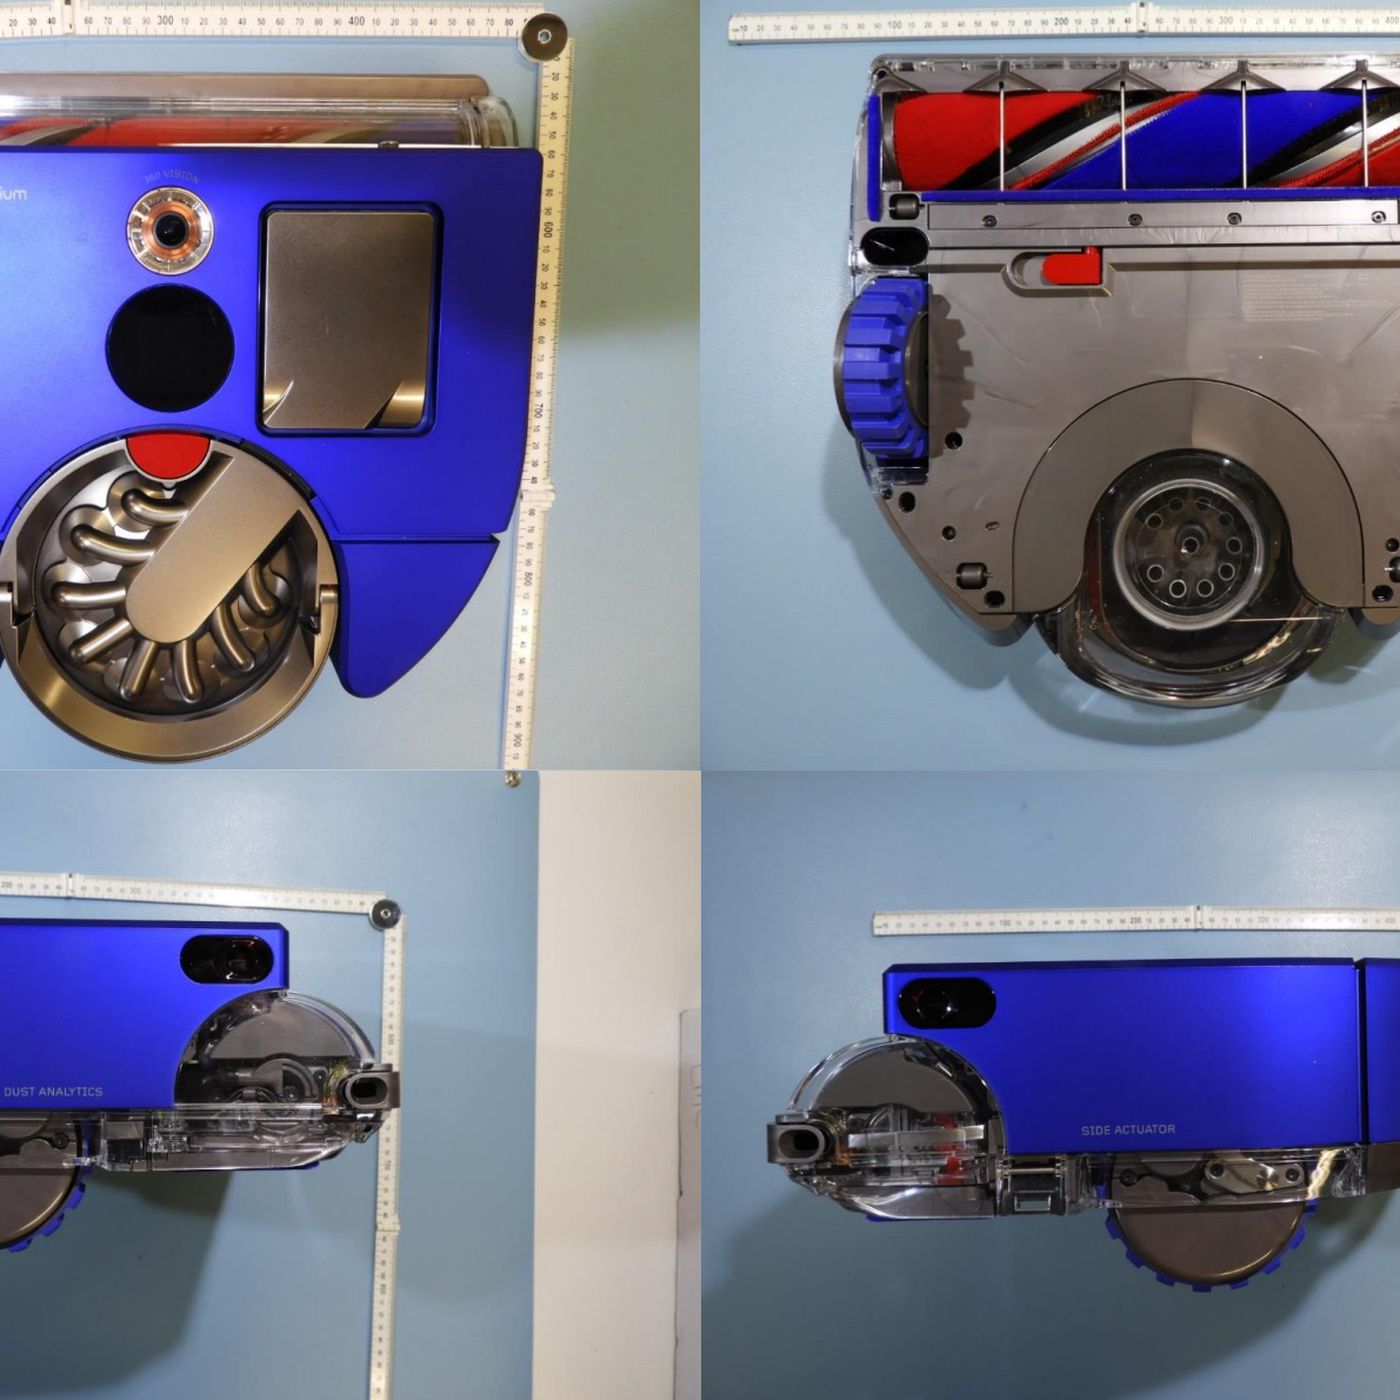 Mejorar hipoteca Faceta Dyson's next robot vacuum cleaner revealed in FCC filings with new design -  The Verge